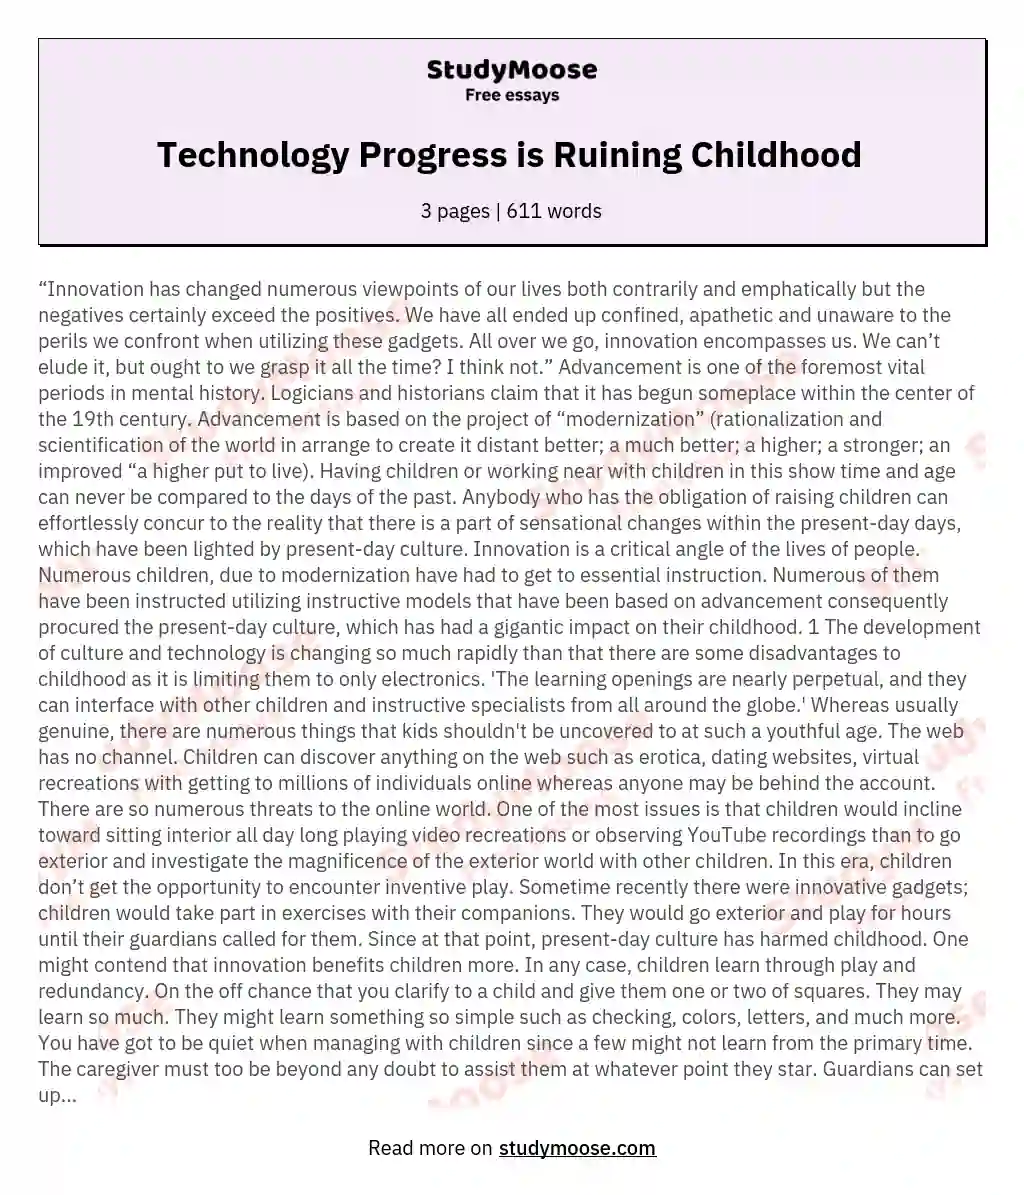 Technology Progress is Ruining Childhood  essay